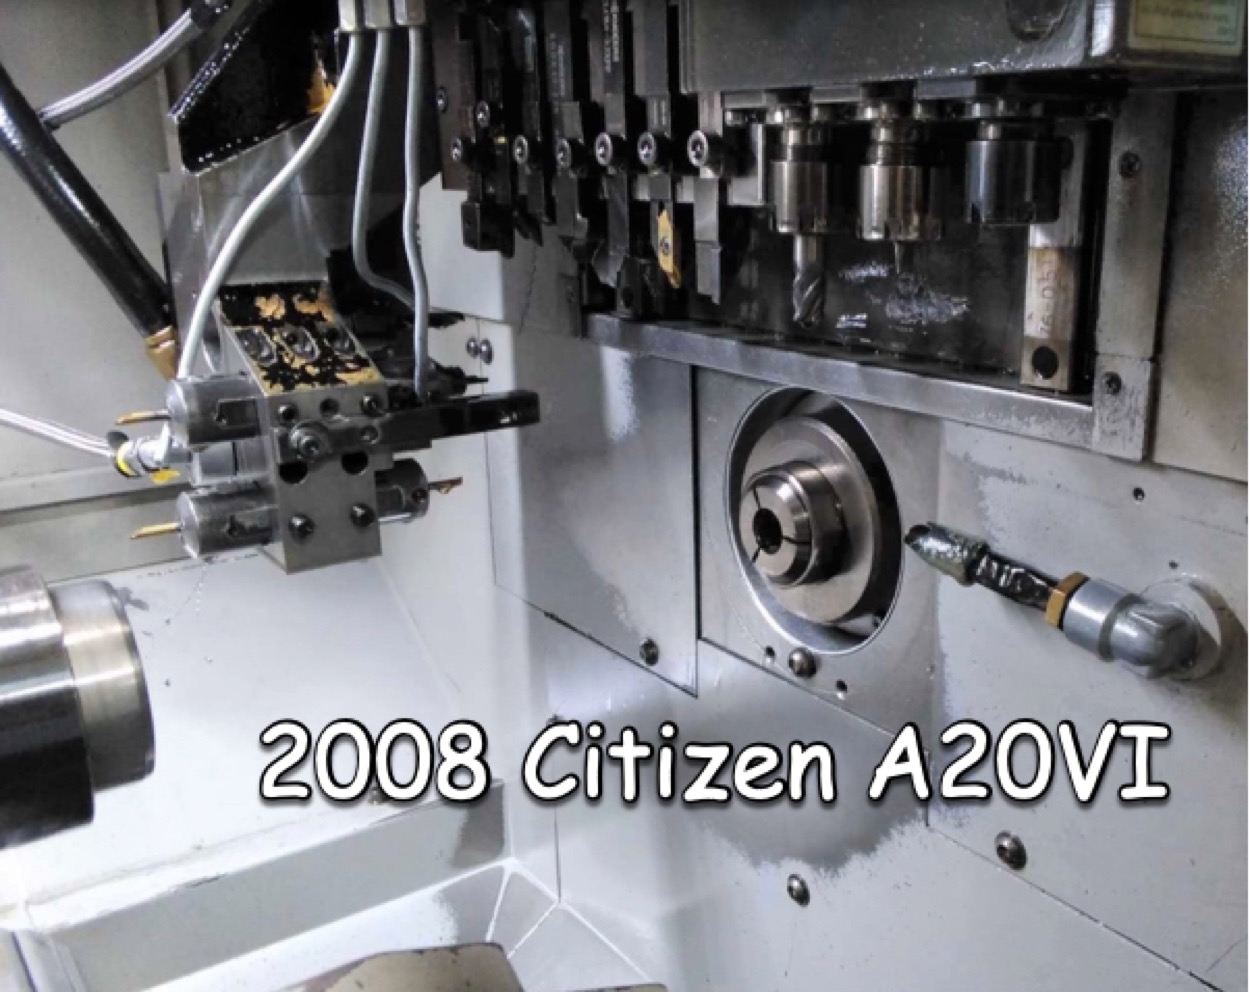 Citizen A-20 VII 2008